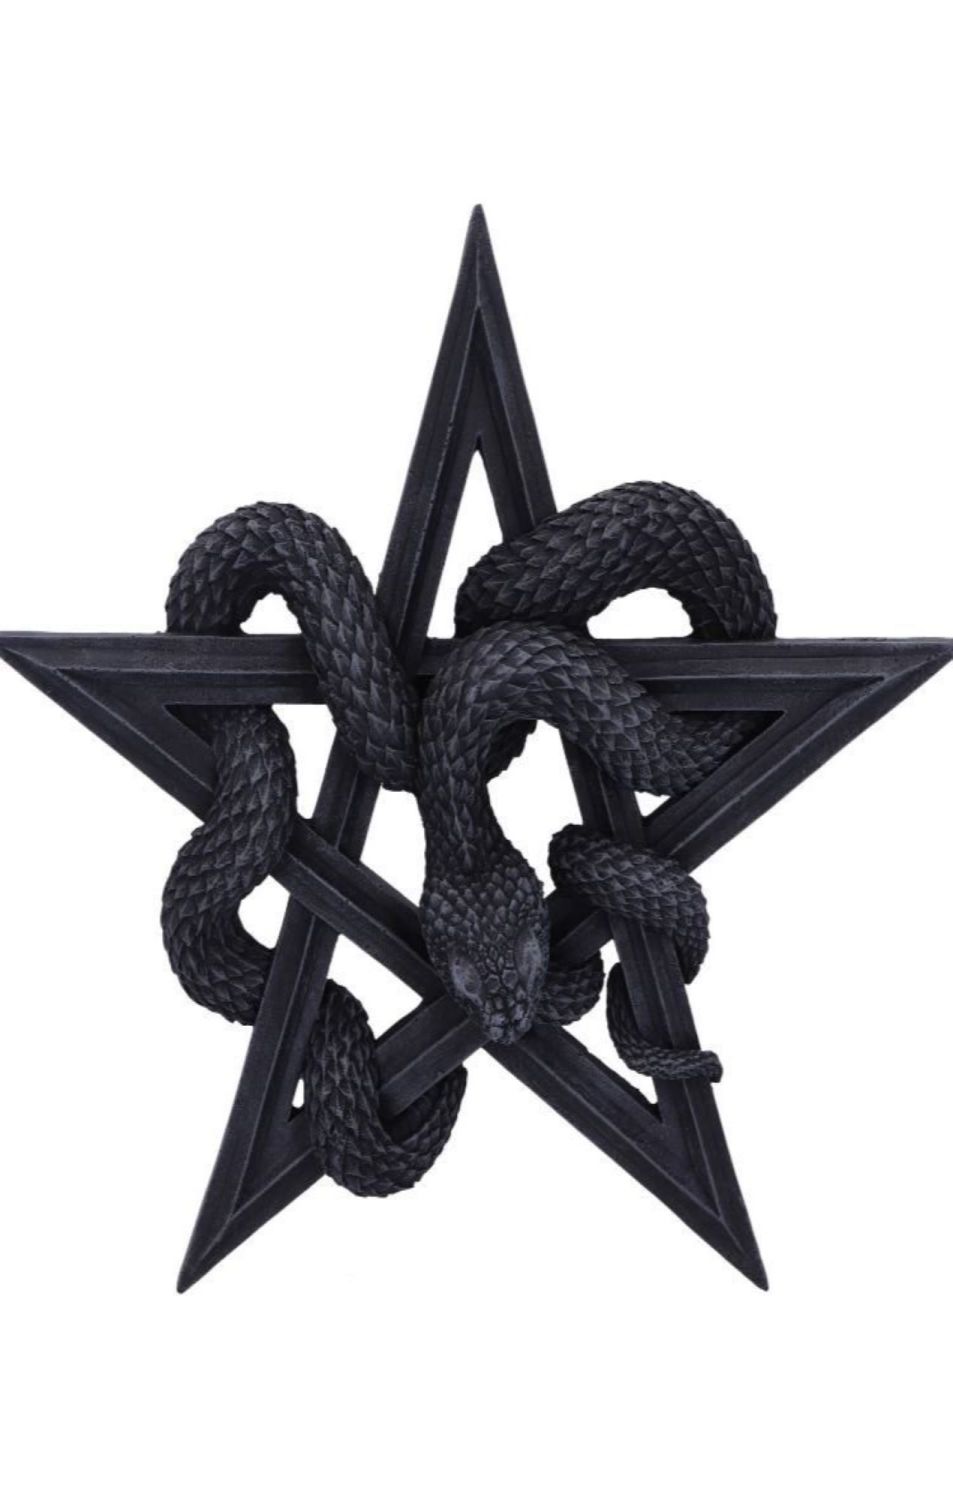 Serpents worship plaque RRP £29.99